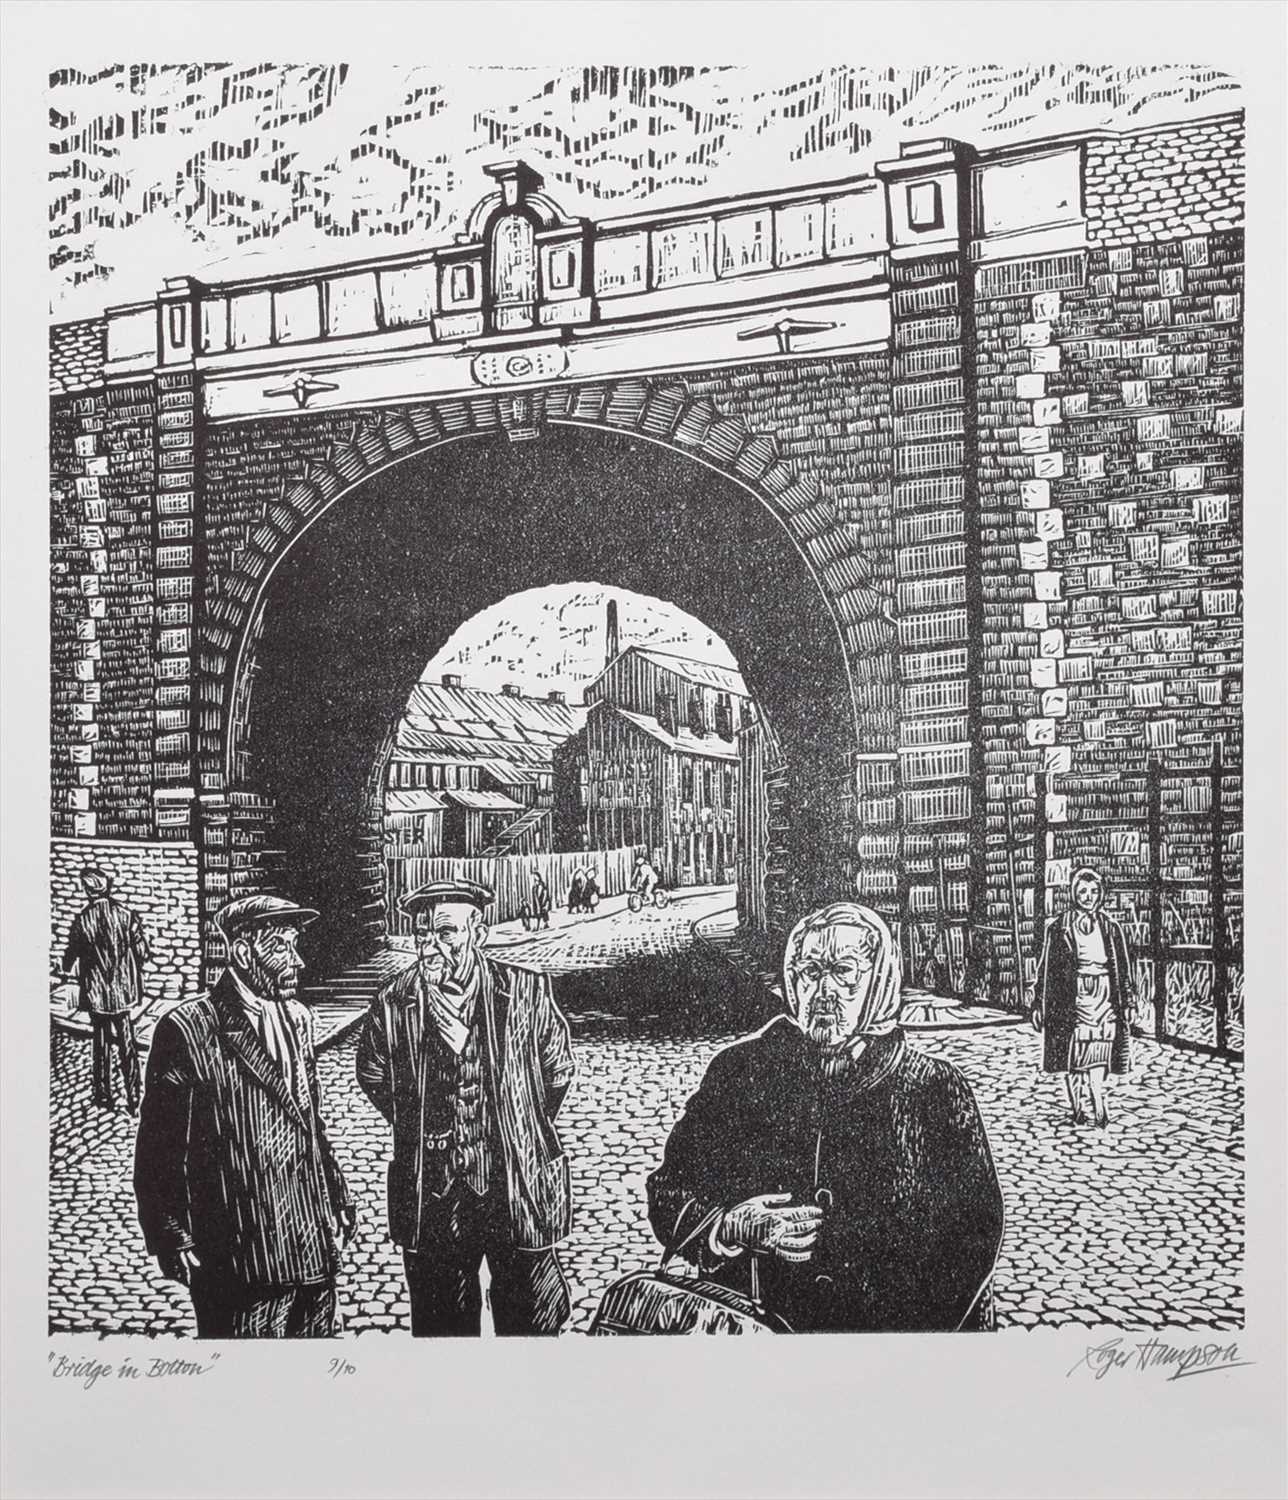 Lot 126 - Roger Hampson, "Bridge in Bolton", linocut.